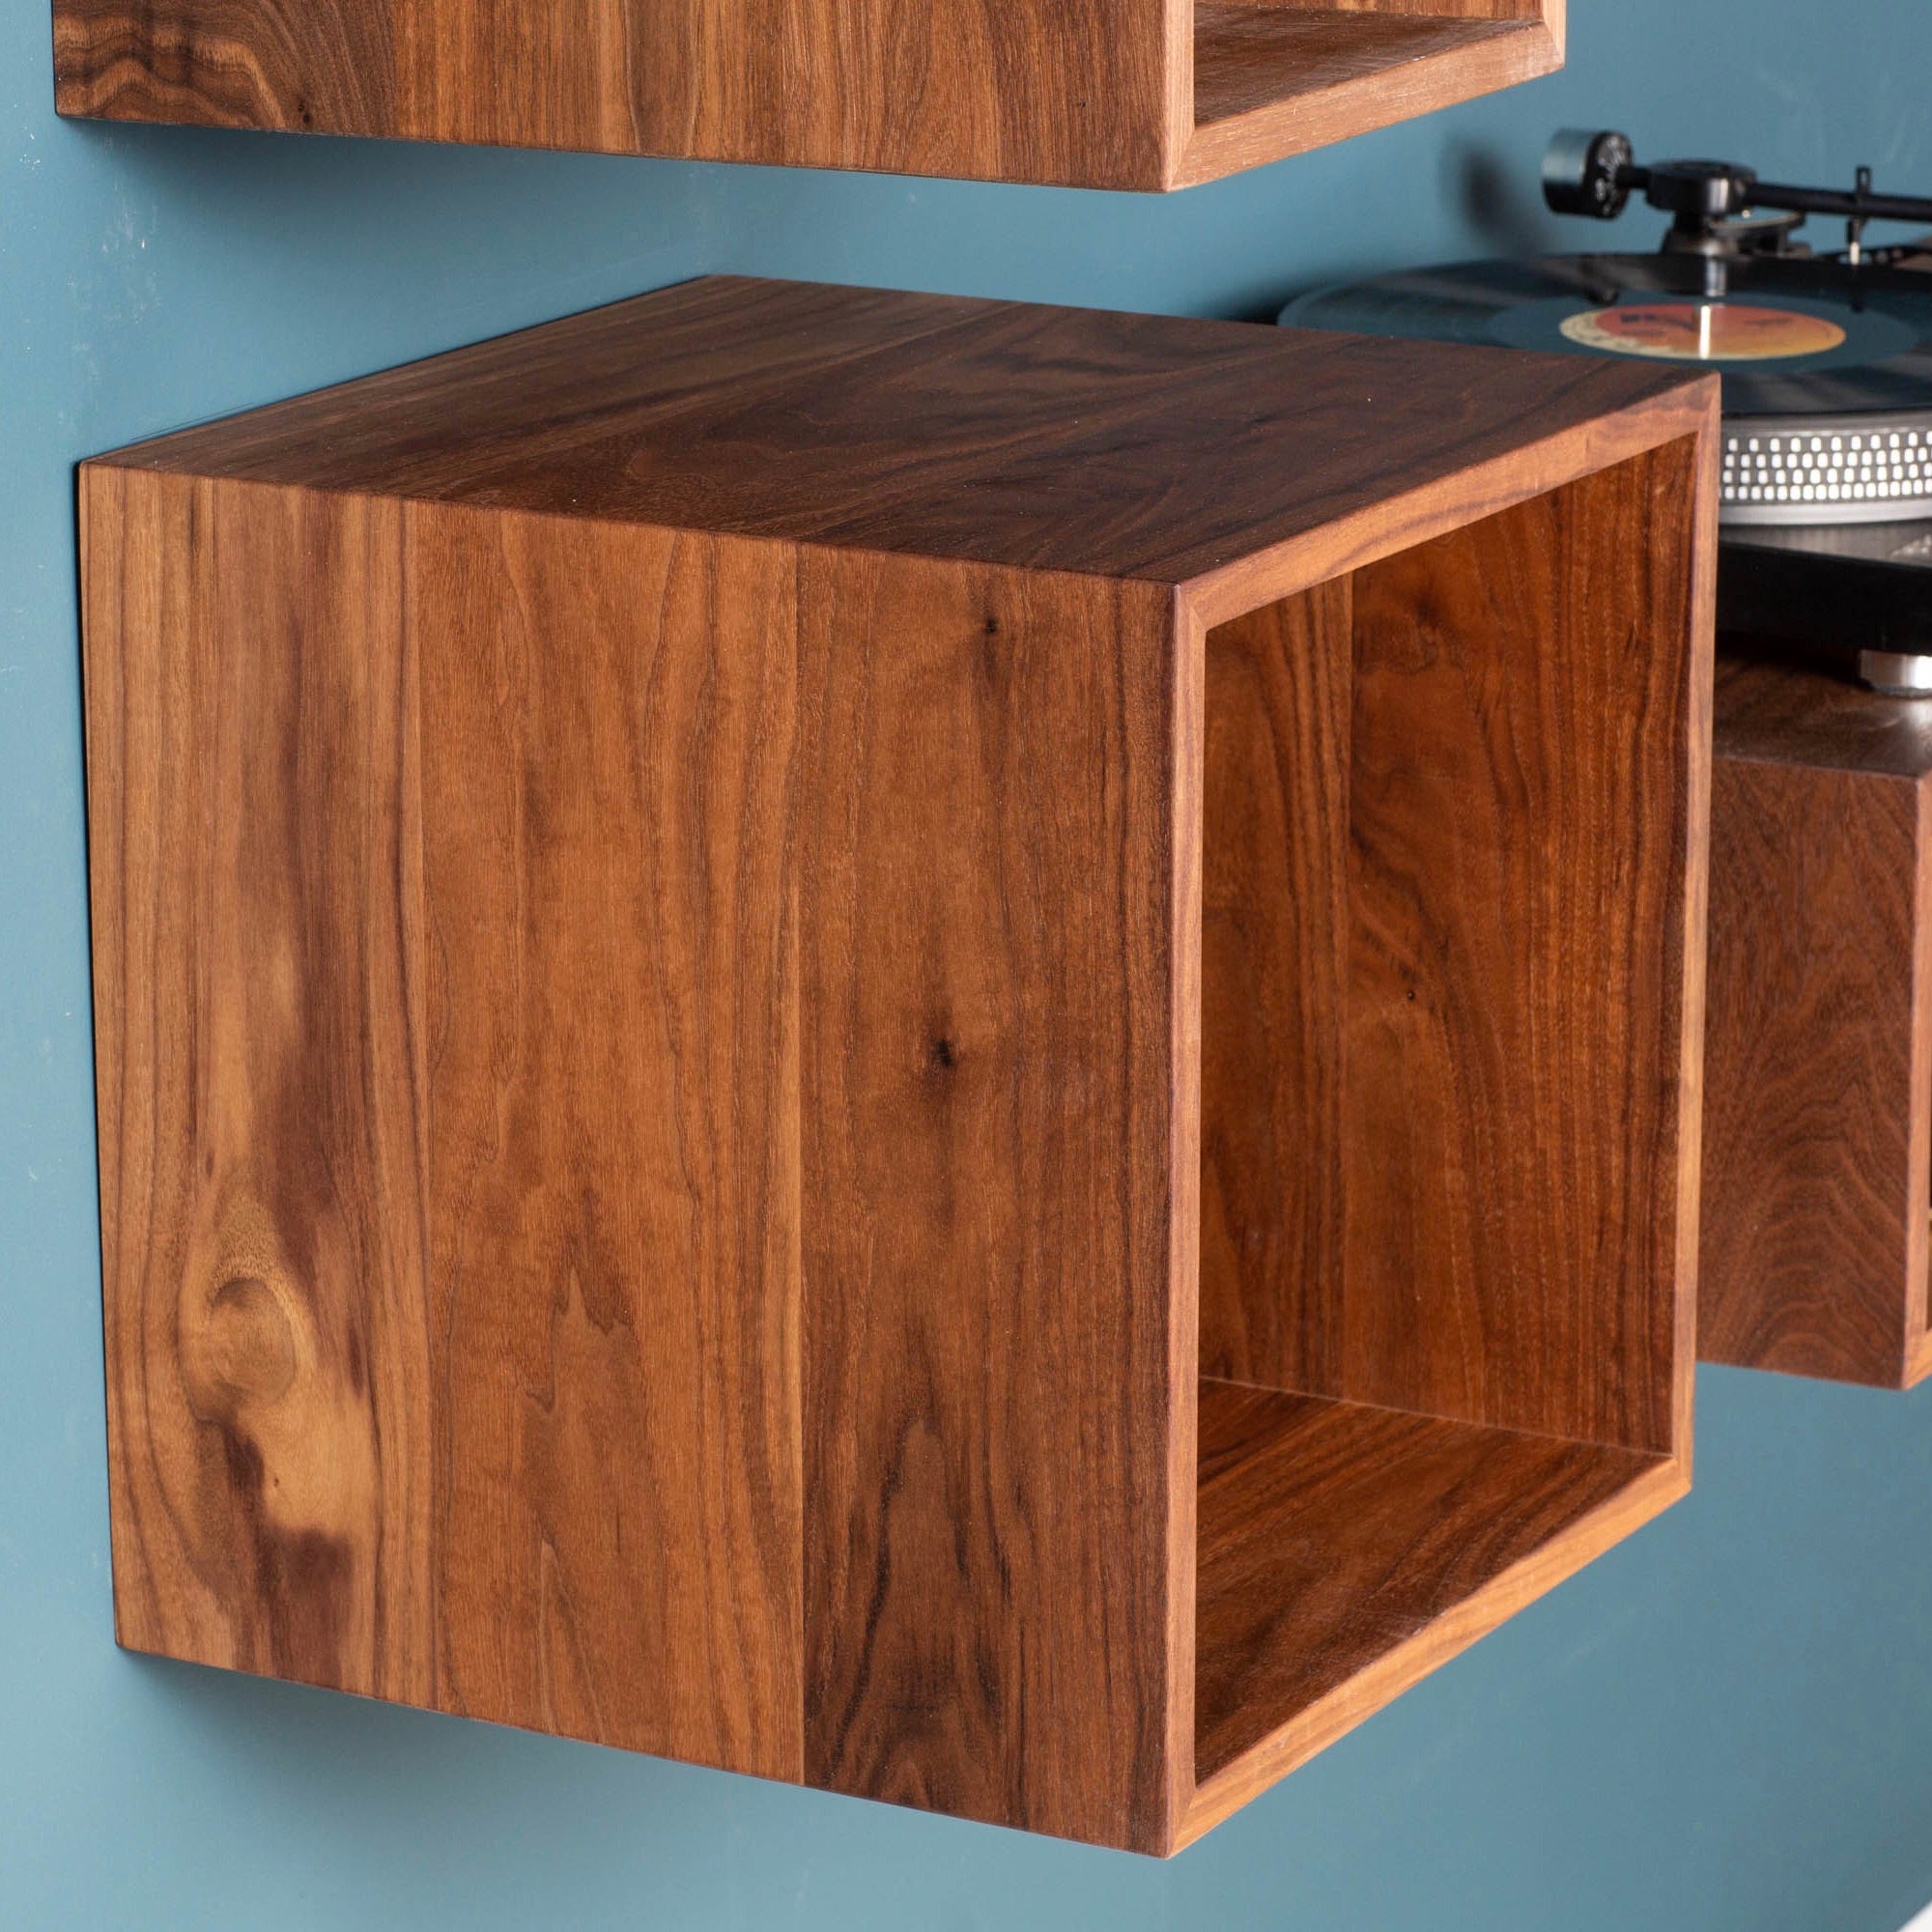 Record Storage Shelves in Walnut - Krøvel Furniture Co. Handmade in Maine